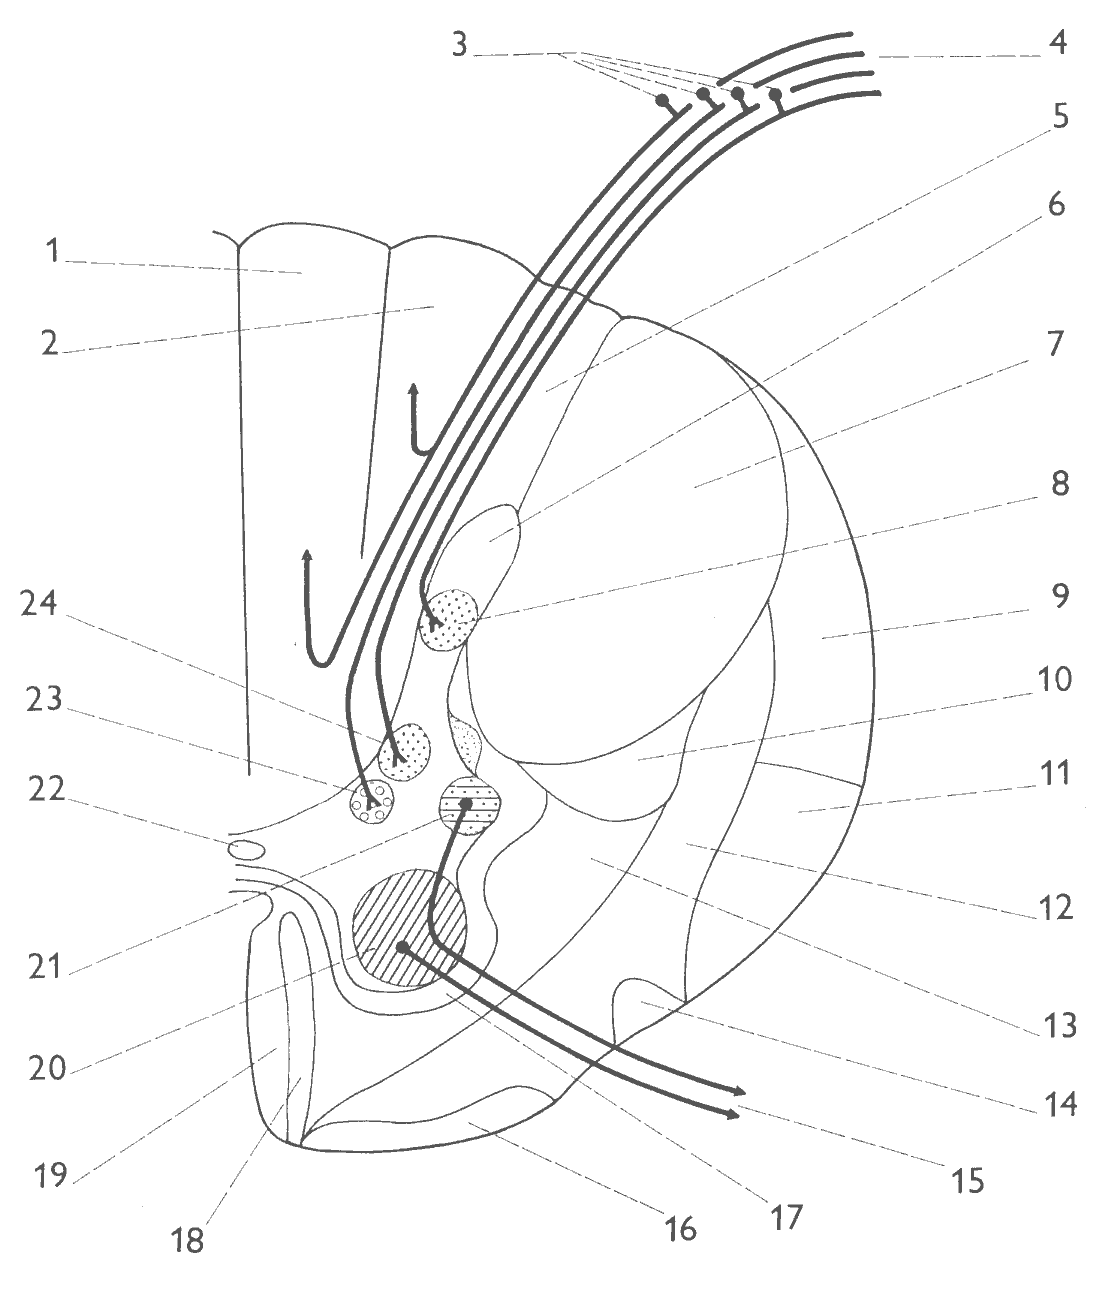 Obr. 1. Schéma příčného řezu hřbetní míchou, které ilustruje klasické pojetí strukturální skladby šedé a bílé hmoty (upraveno podle Žlábka, 1950). 1 - fasciculus gracilis (tr. spinobulbaris); 2 - fasciculus cuneatus (tr. spinobulbaris); 3 - neurony pseudounipolárního typu ve spinálním gangliu; 4 - radix posterior (dorsalis) n. spinalis; 5 - fasciculus posterolateralis (Lissaueri); 6 - apex columnae post. (substantia gelatinosa  Rolandi); 7 - tr. corticospinalis lateralis; 8 - ncl. proprius; 9 - tr. spinocerebellaris posterior; 10 - tr. rubrospinalis; 11 - tr. spinocerebellaris anterior; 12 - tr. spinothalamicus, spinotectalis et spinoreticularis; 13 - tr. reticulospinalis; 14 - tr. olivospinalis; 15 - radix anterior (ventralis) n. spinalis; 16 - tr. vestibulospinalis; 17 - tr. spinospinalis; 18 - tr. corticospinalis anterior; 19 - tr. tectospinalis; 20 - ncll. motorii; 21 - ncl. intermediolateralis; 22 - canalis centralis; 23 - ncl. intermediomedialis; 24 - ncl. thoracicus (Stilling-Clarke).